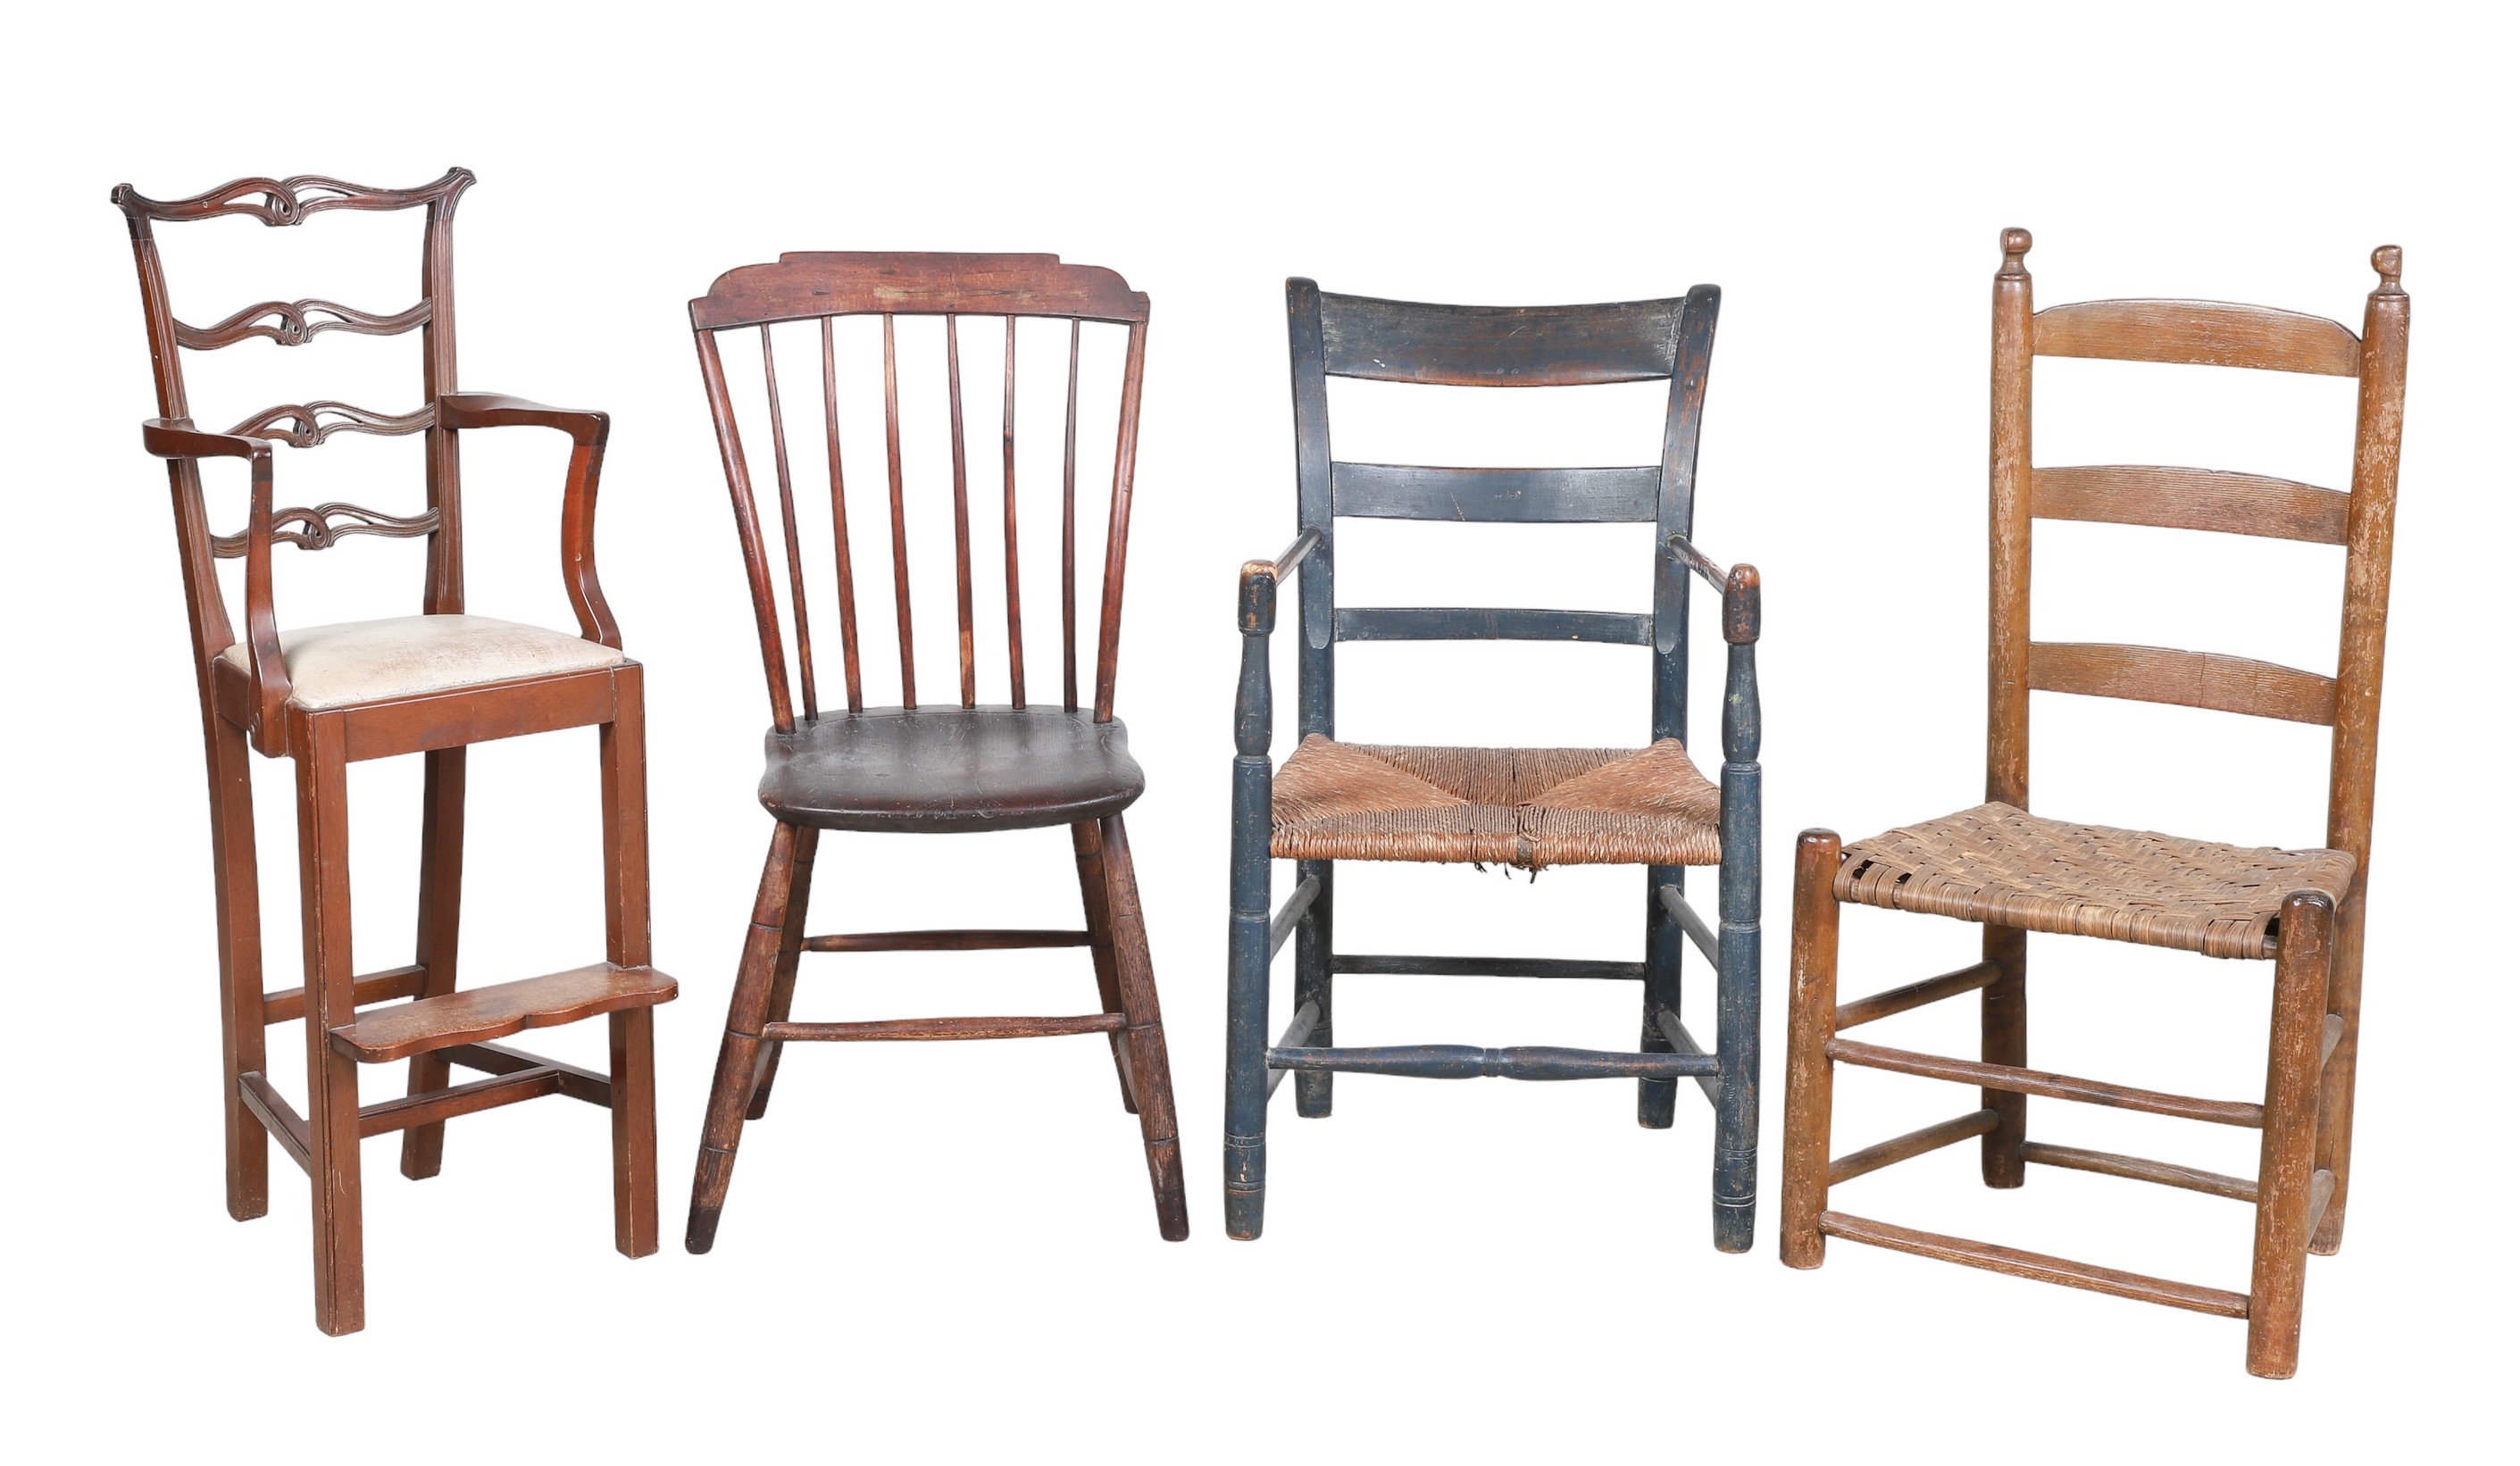 (4) Primitive chairs, c/o blue